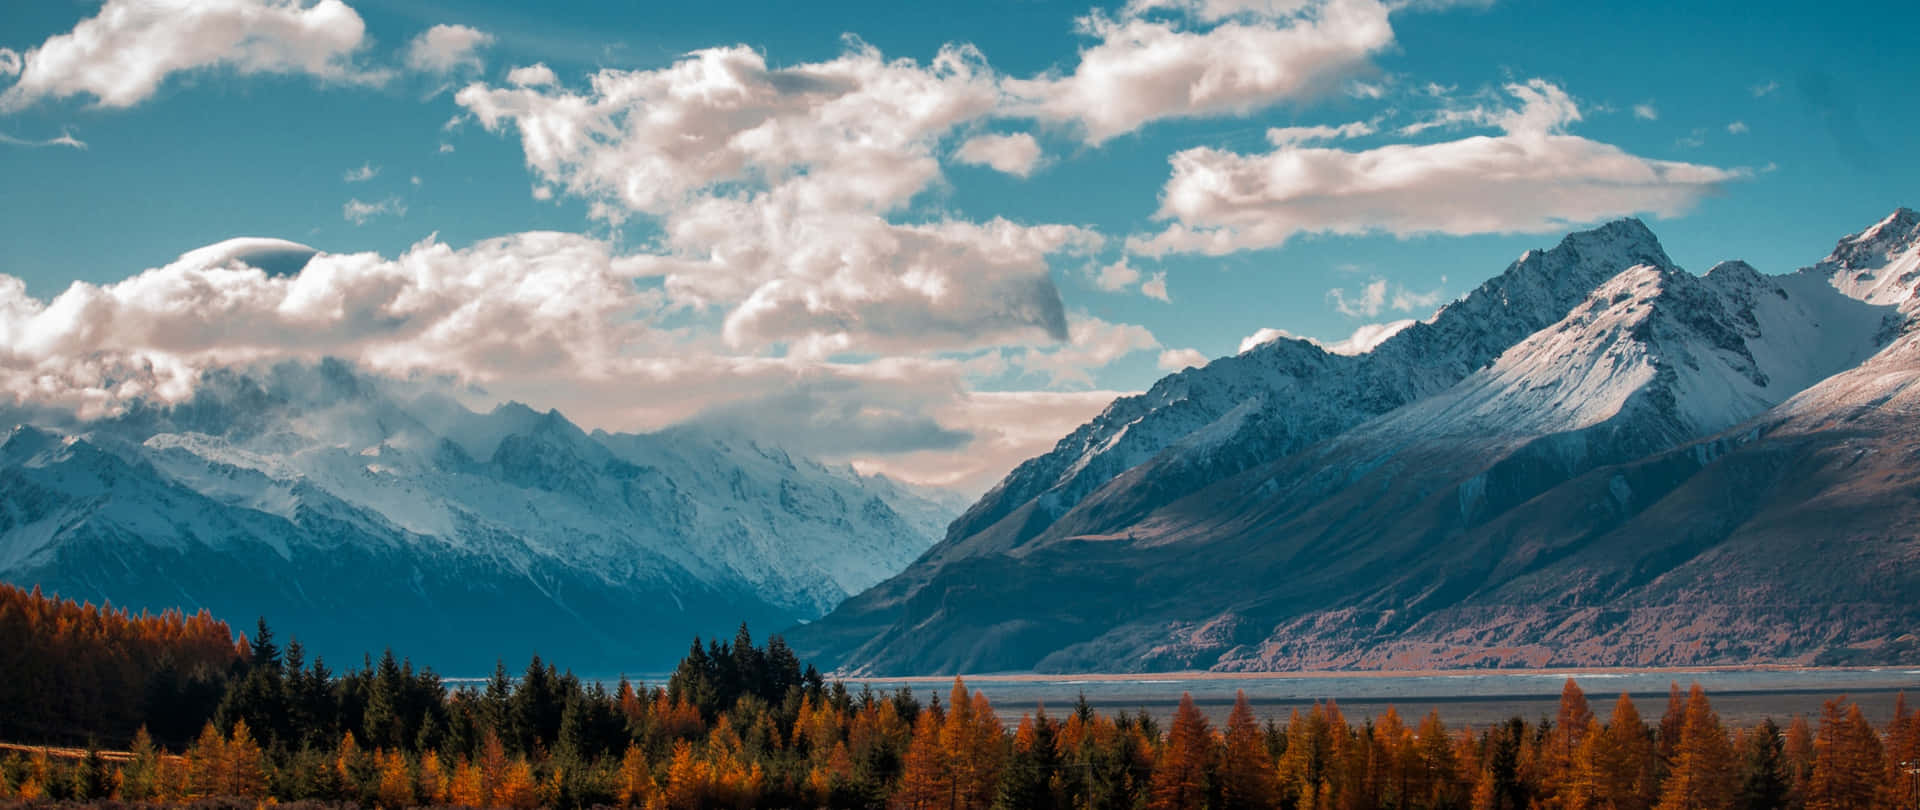 Lake Pukaki Snowcapped Mountain Landscape Wallpaper